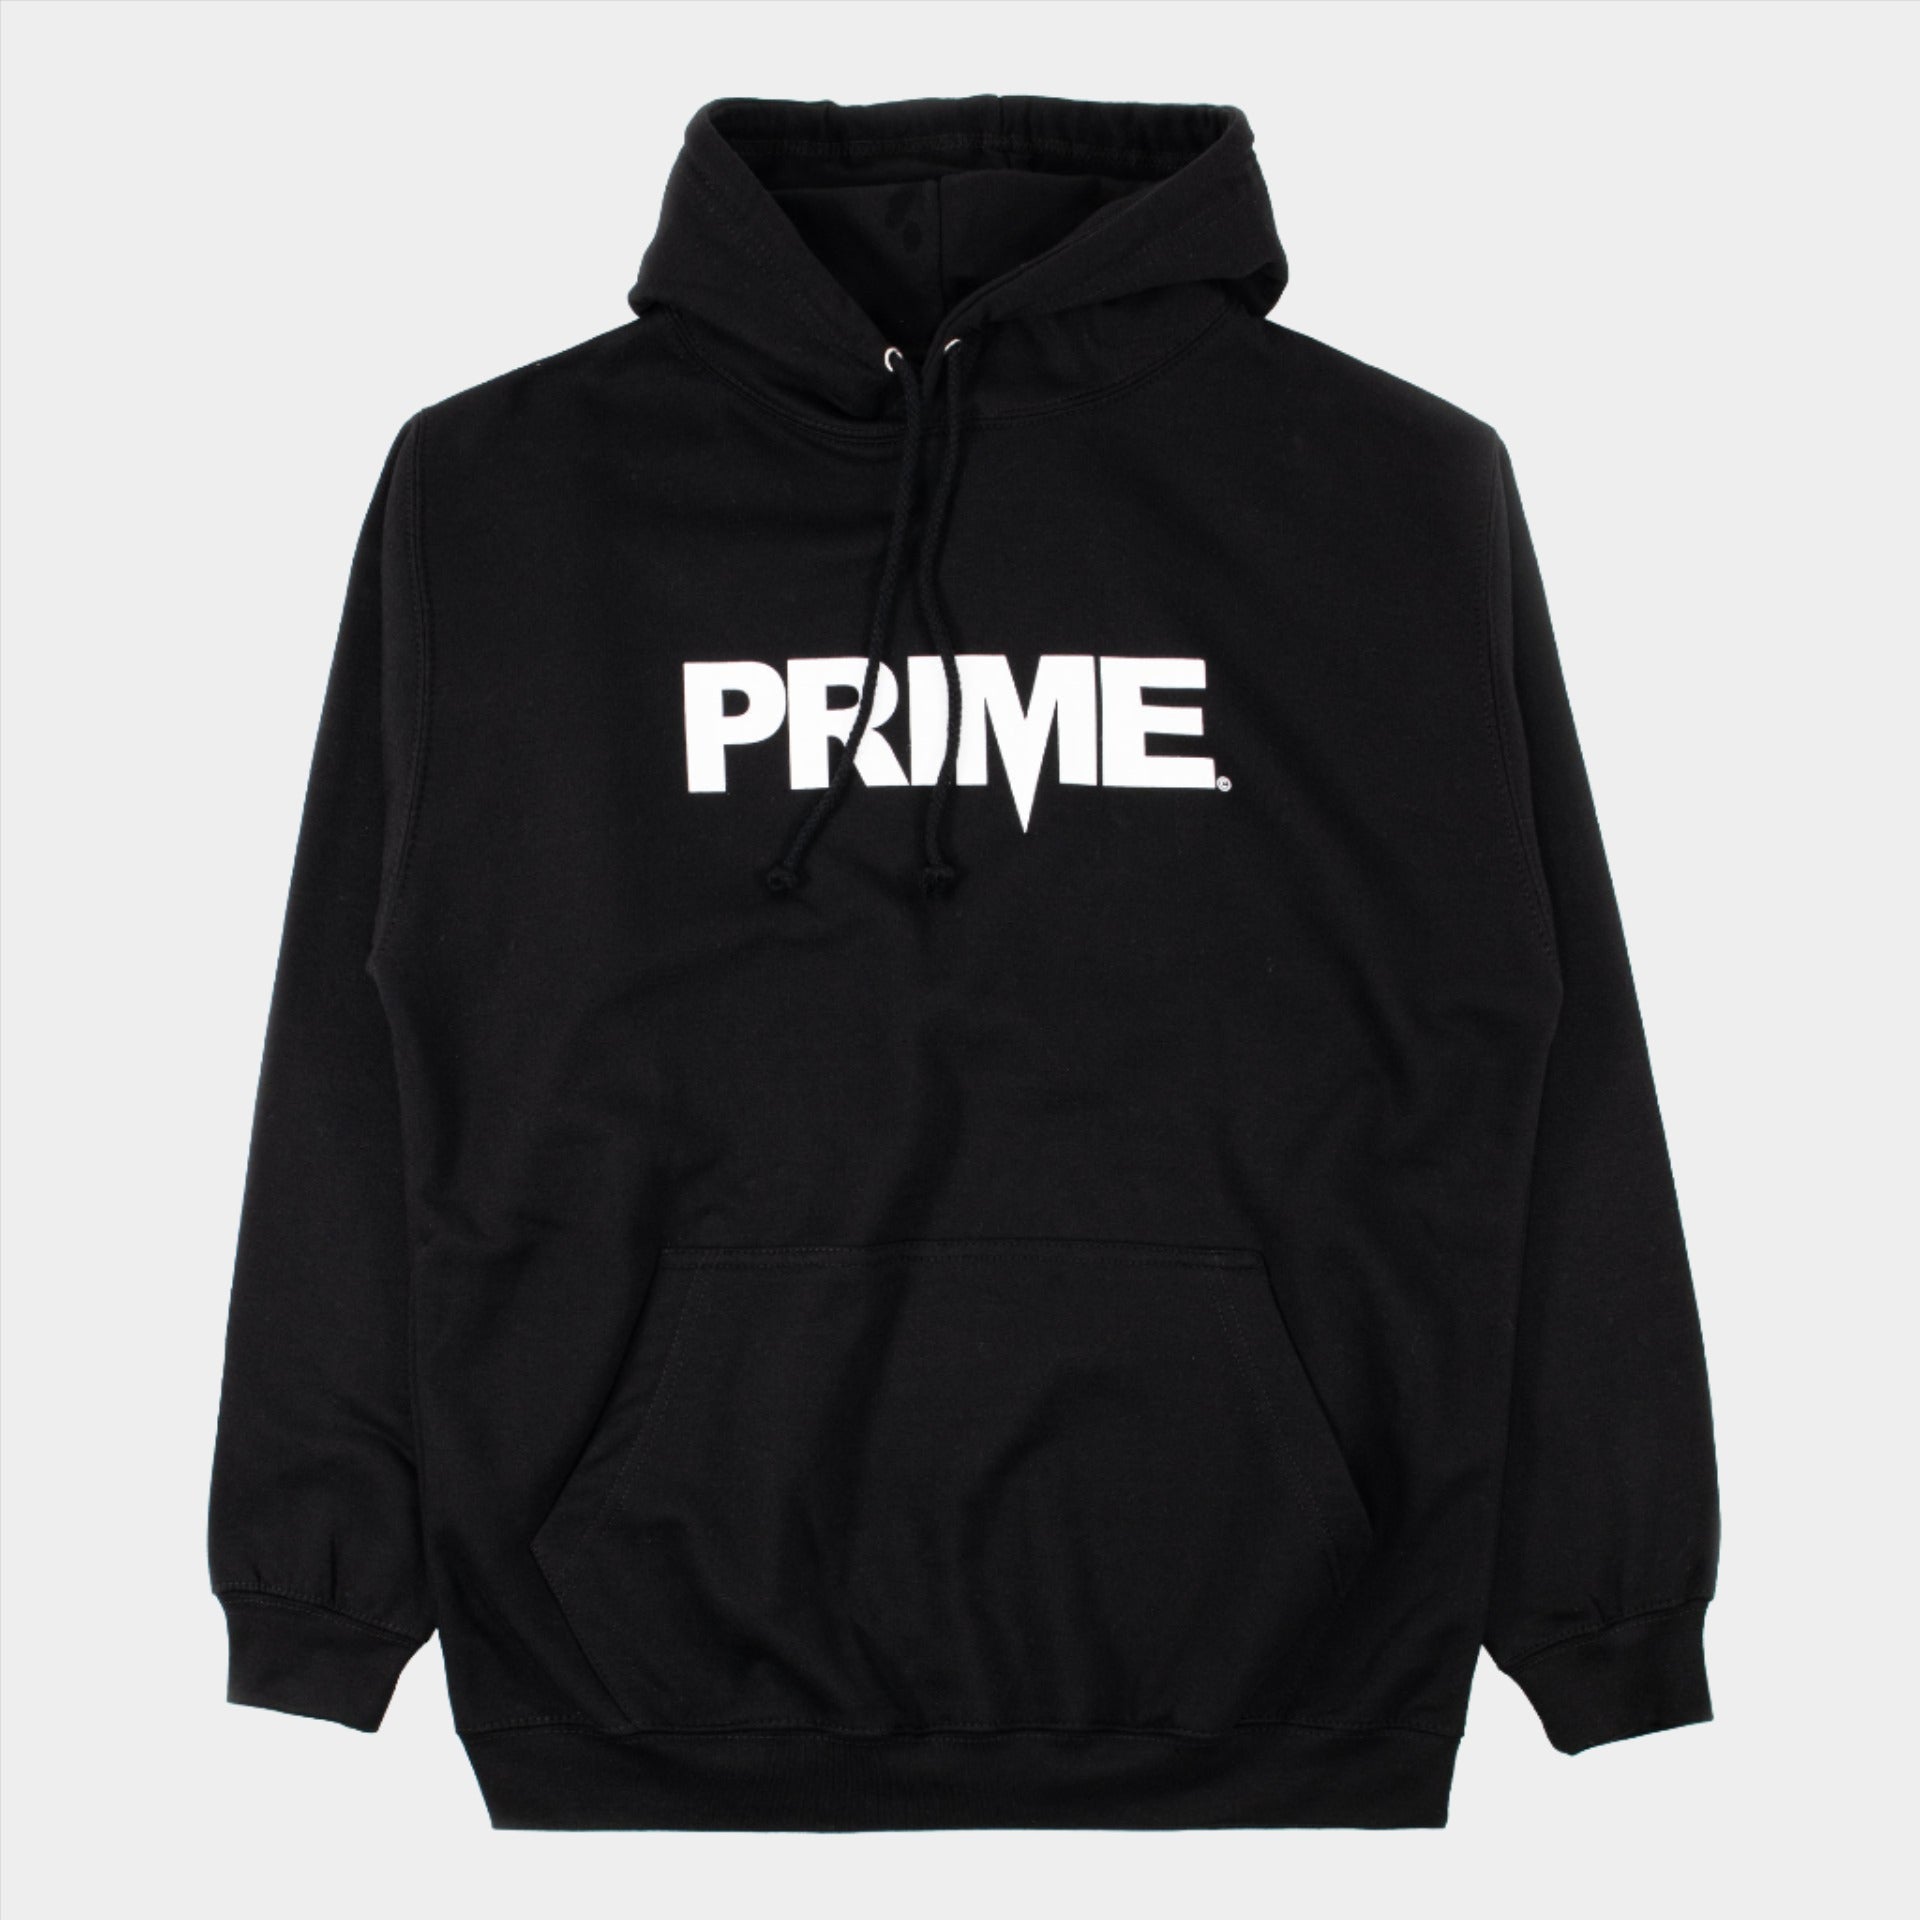 Prime Delux OG Logo Hooded Sweat - Black / White - Prime Delux Store